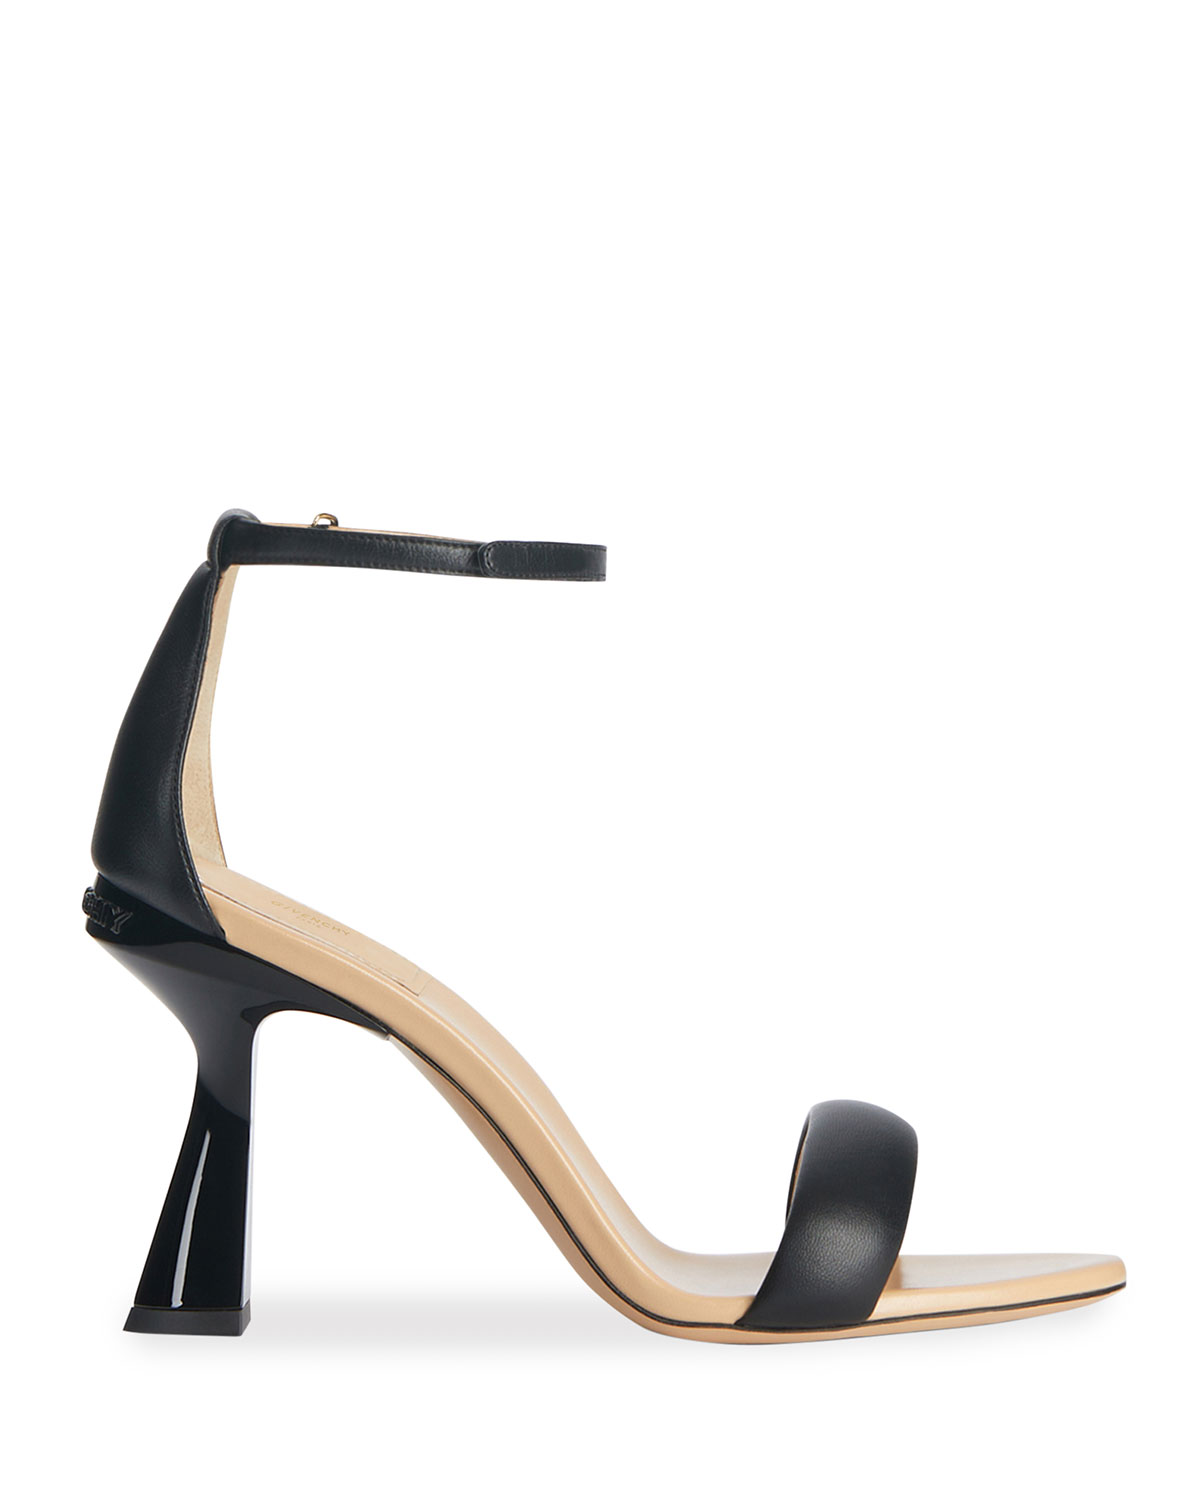 Givenchy Carene Ankle Strap Sandals - LoveShoesClub.com